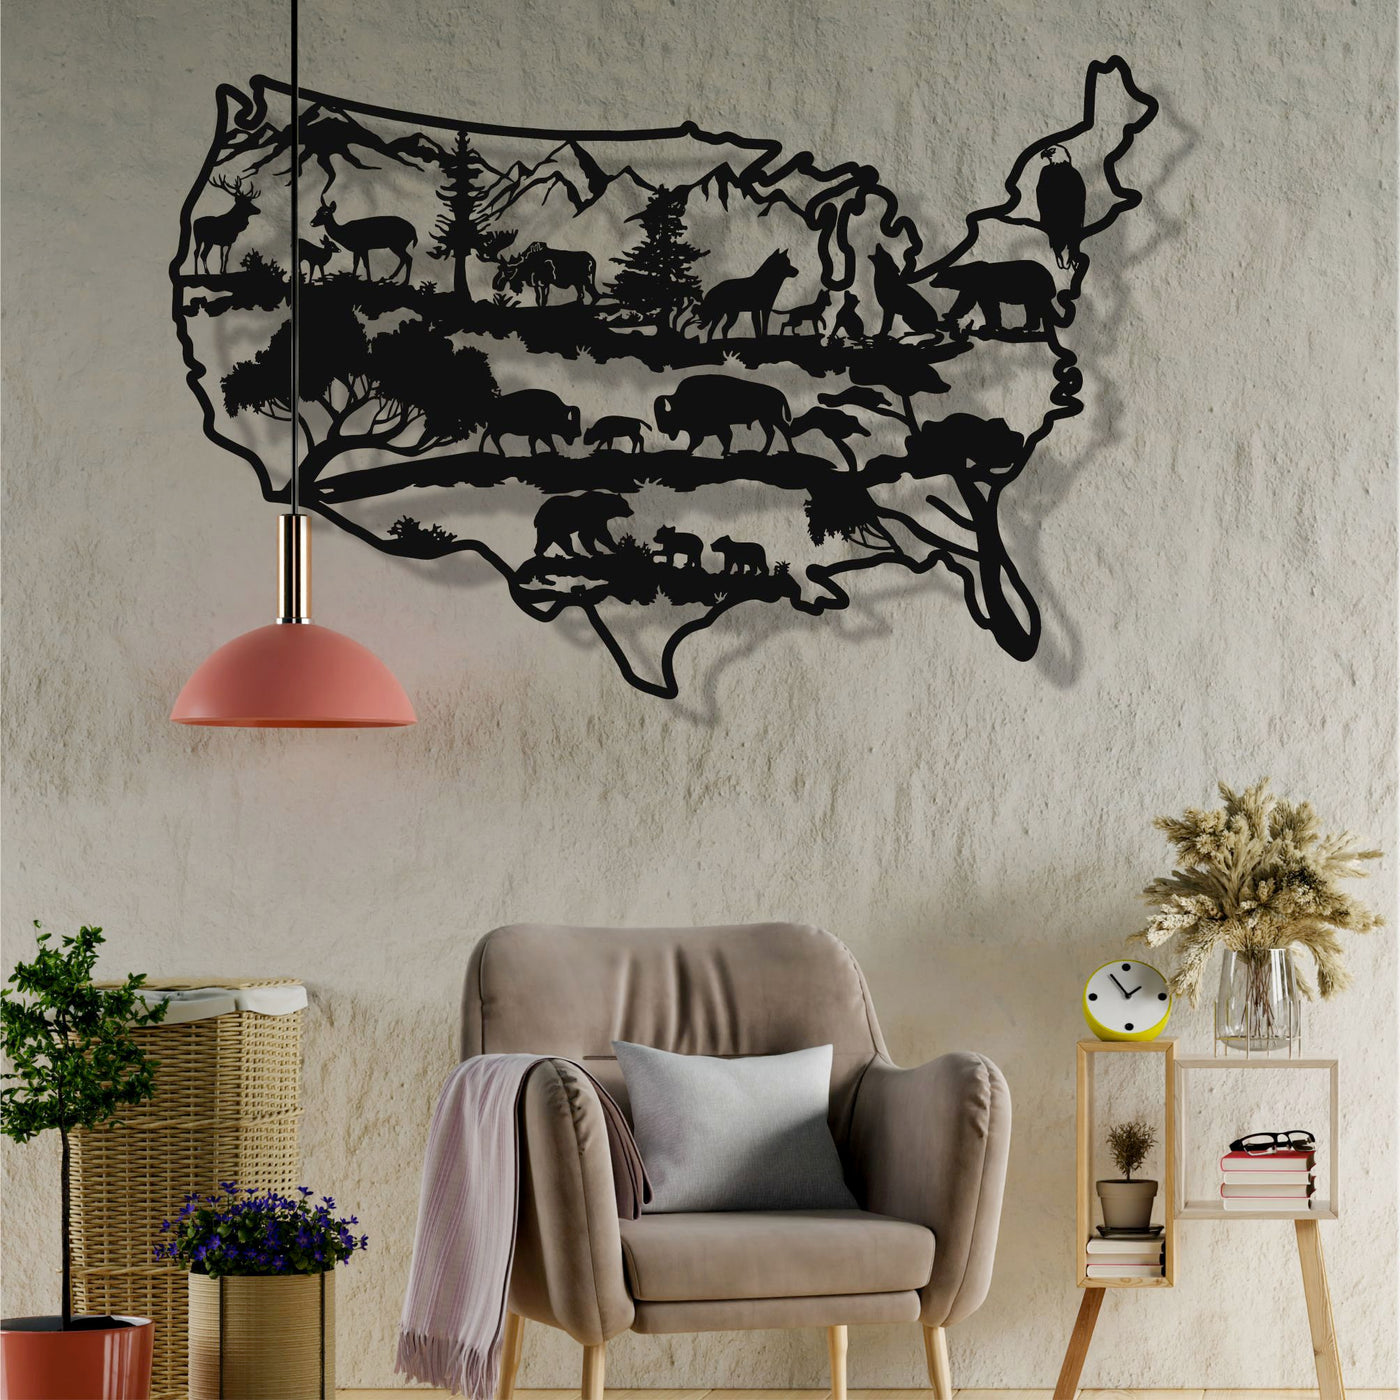 Usa Wildlife Karte Metall Wandkunst